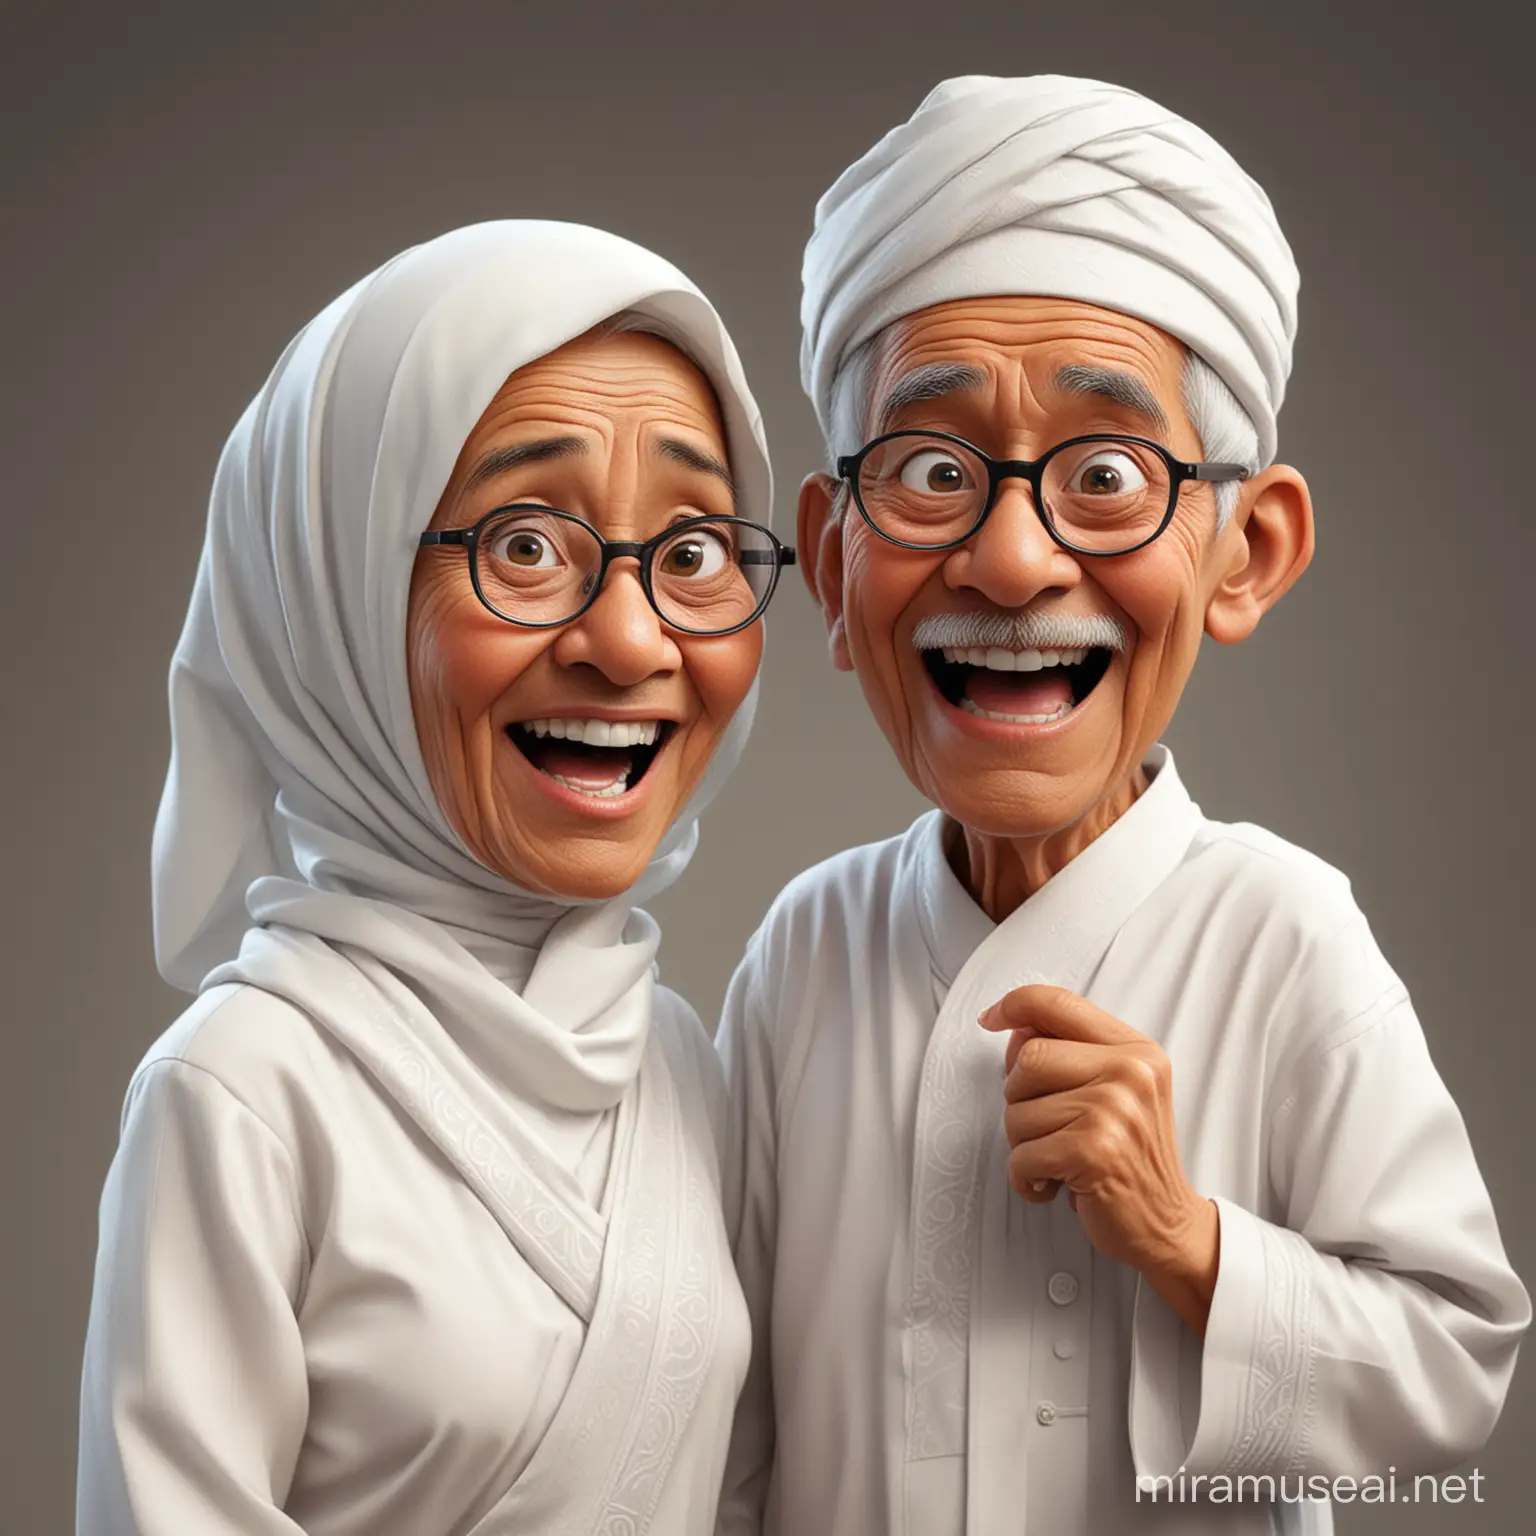 Elderly Indonesian Muslim Couple Making Funny Faces Cartoon Illustration